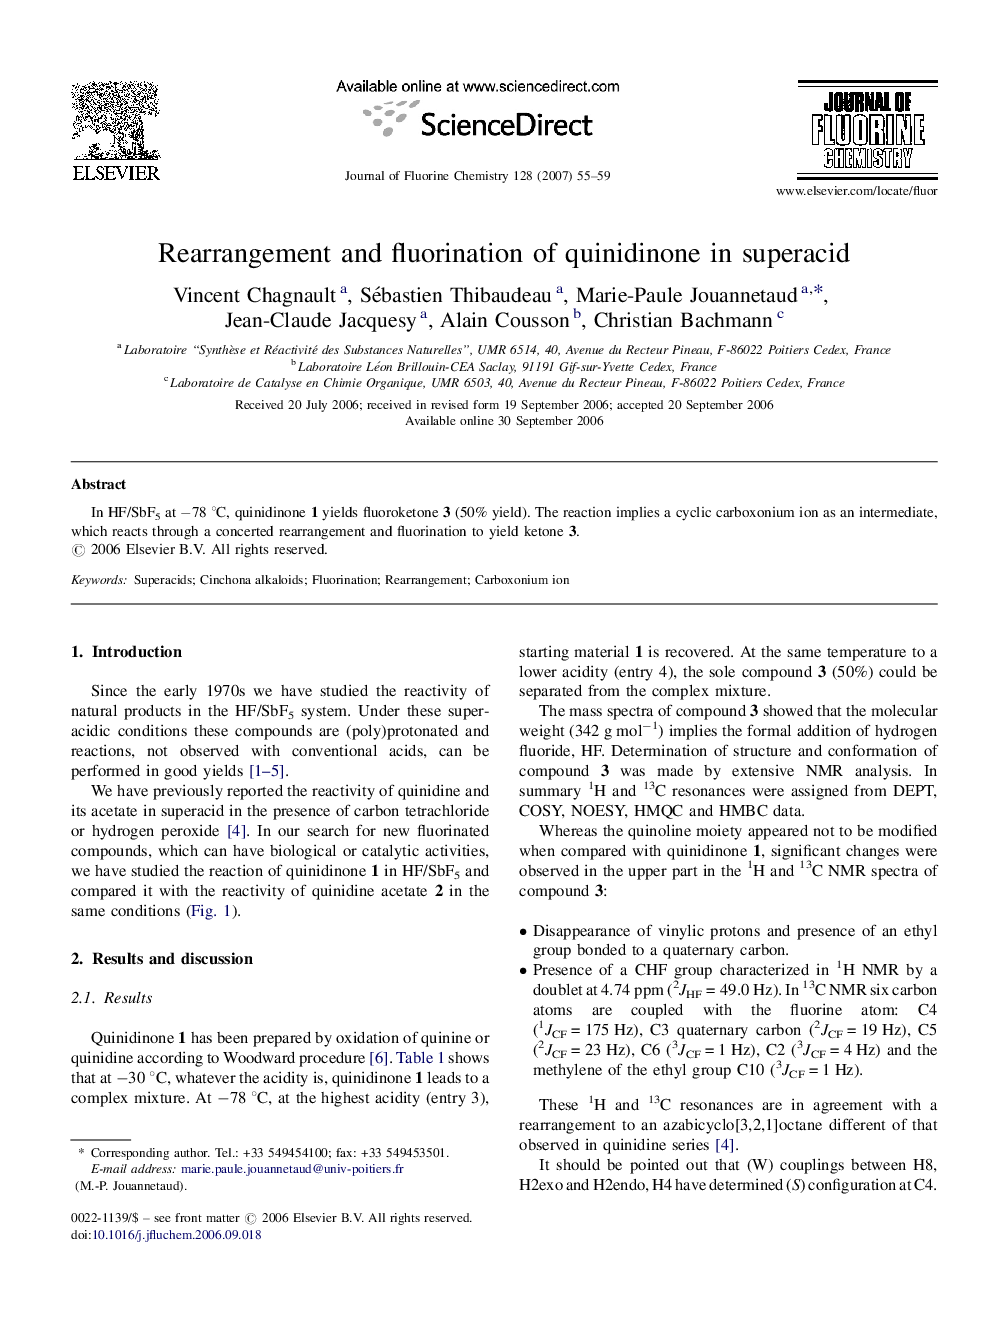 Rearrangement and fluorination of quinidinone in superacid